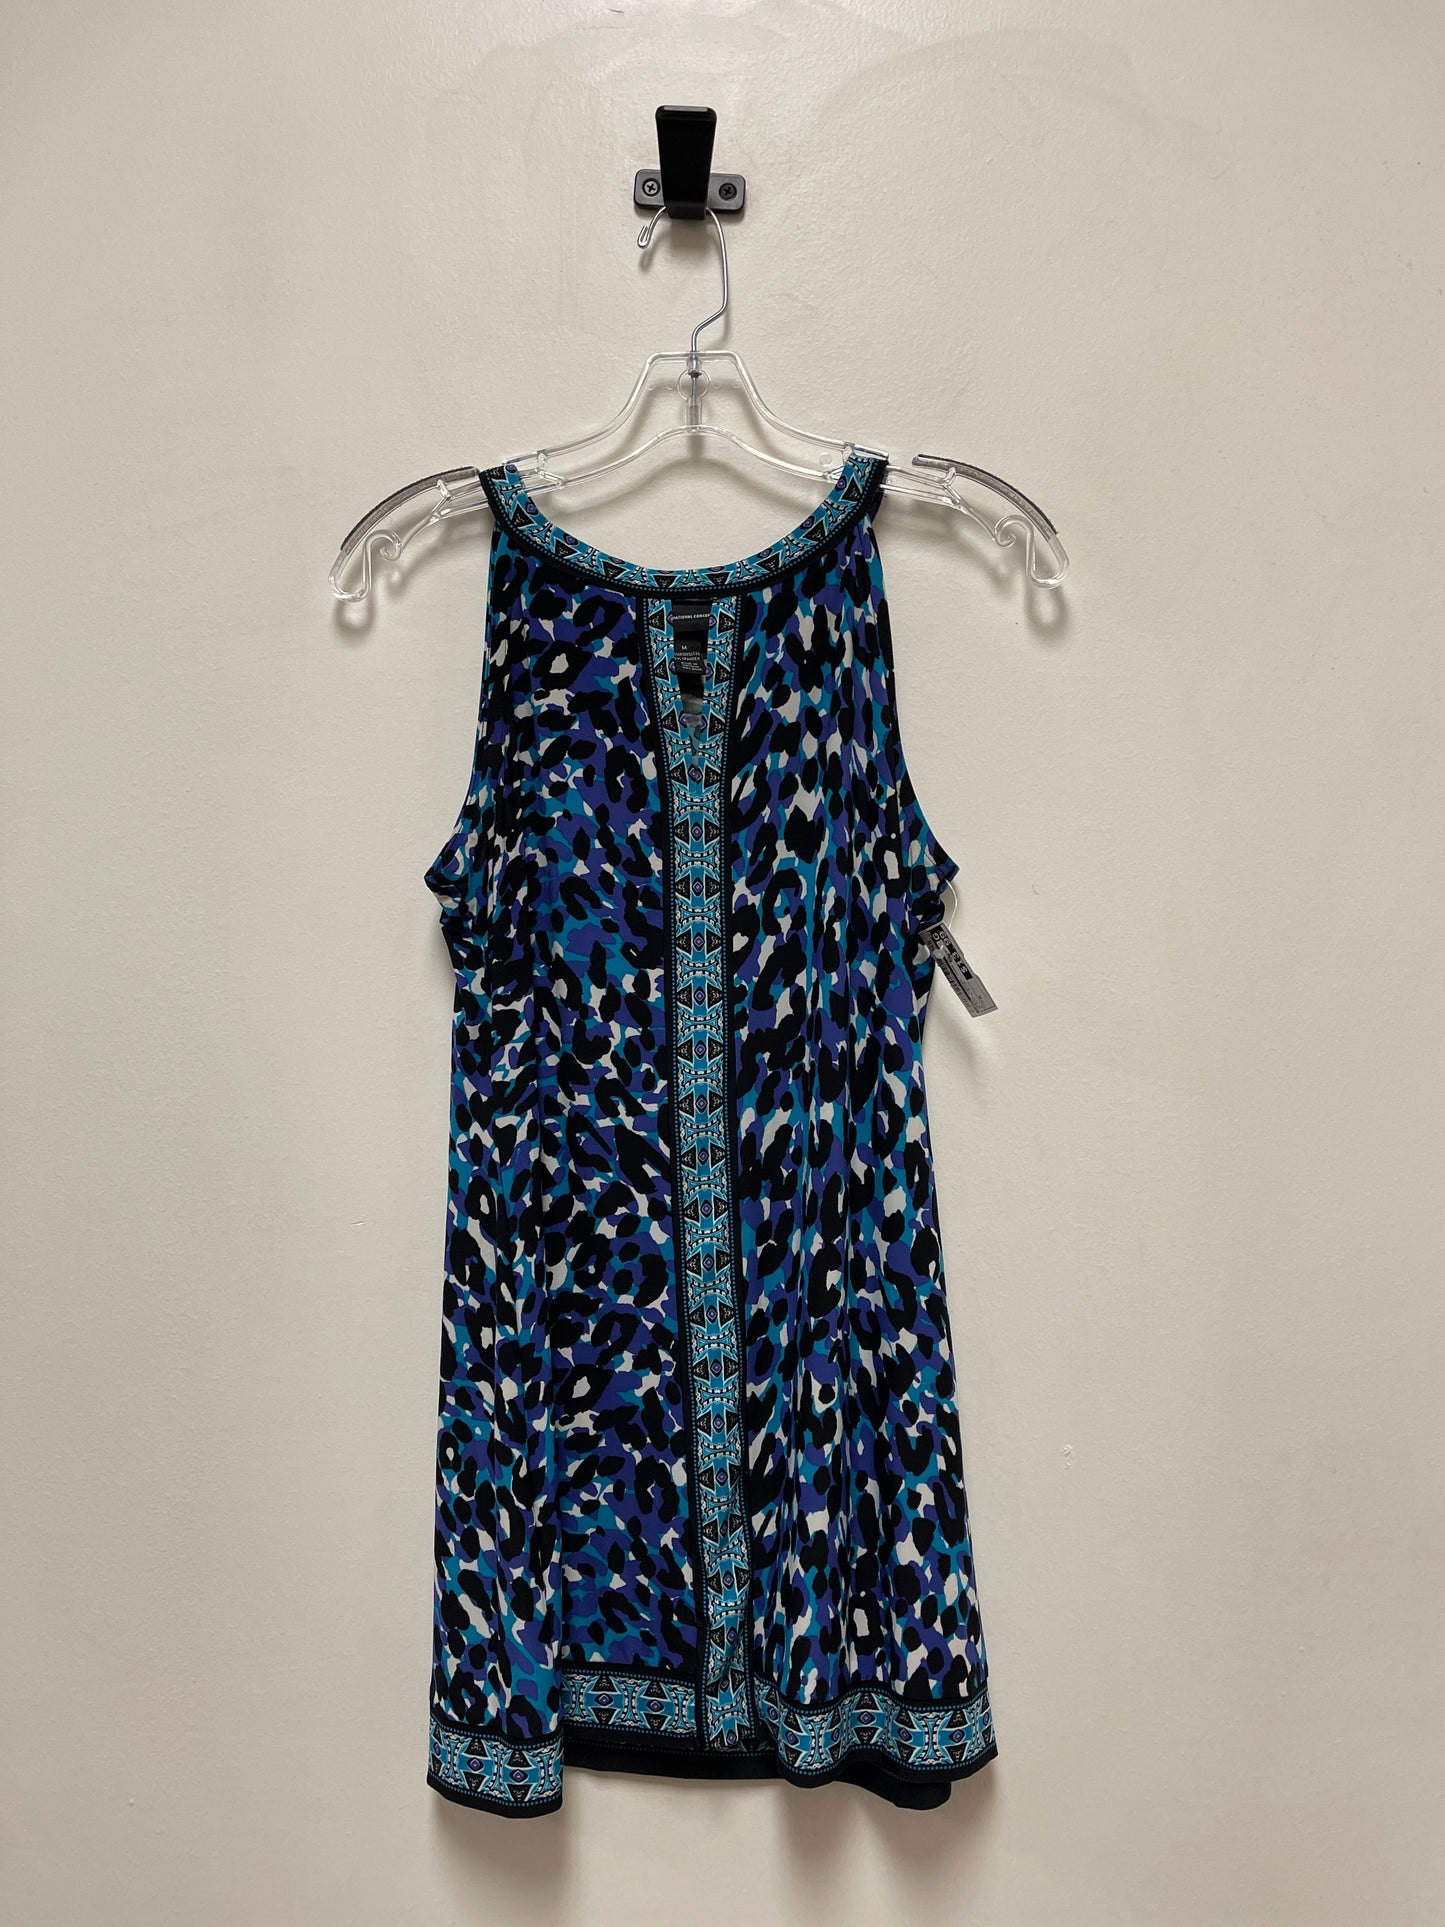 Black & Blue Dress Casual Short Inc, Size M